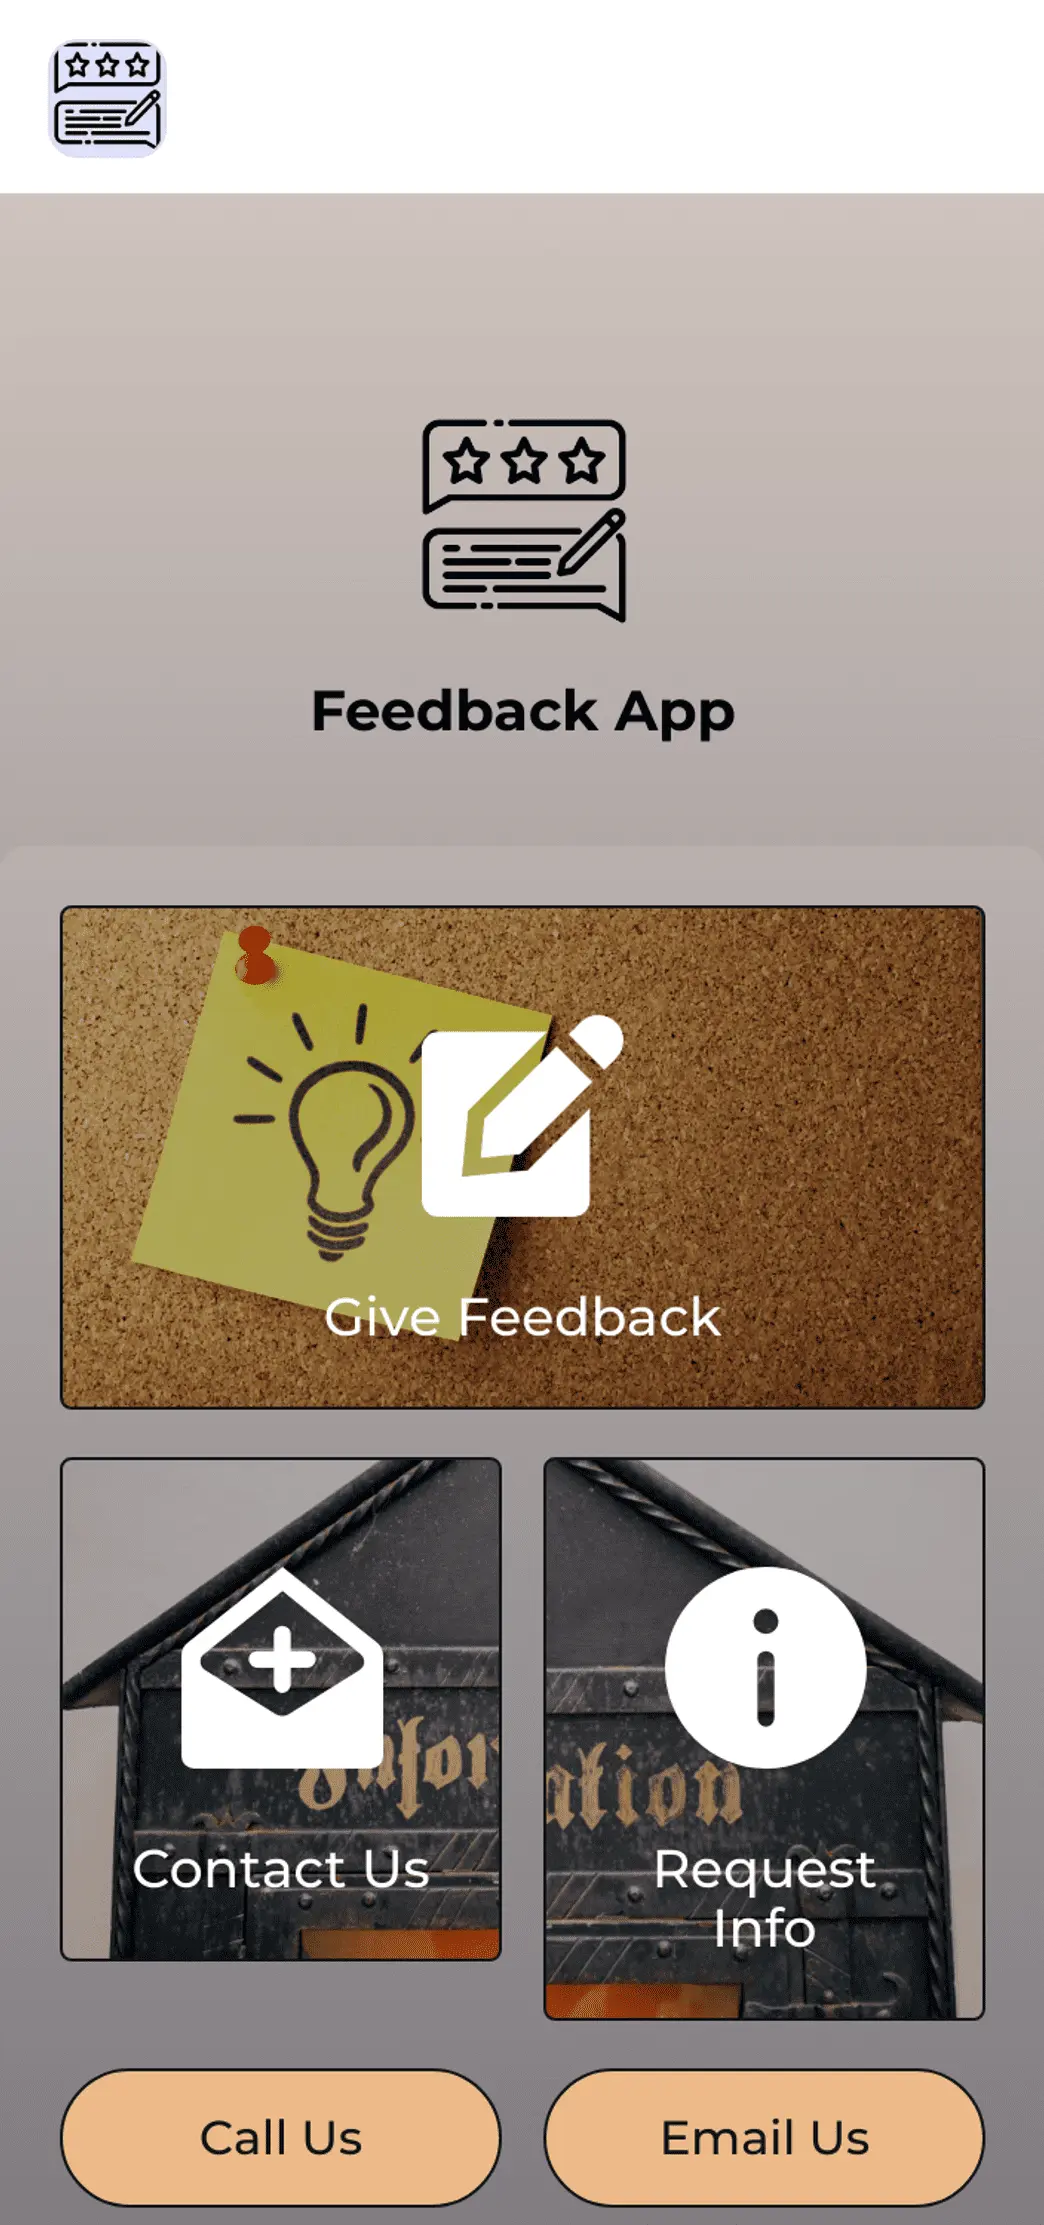 Feedback App